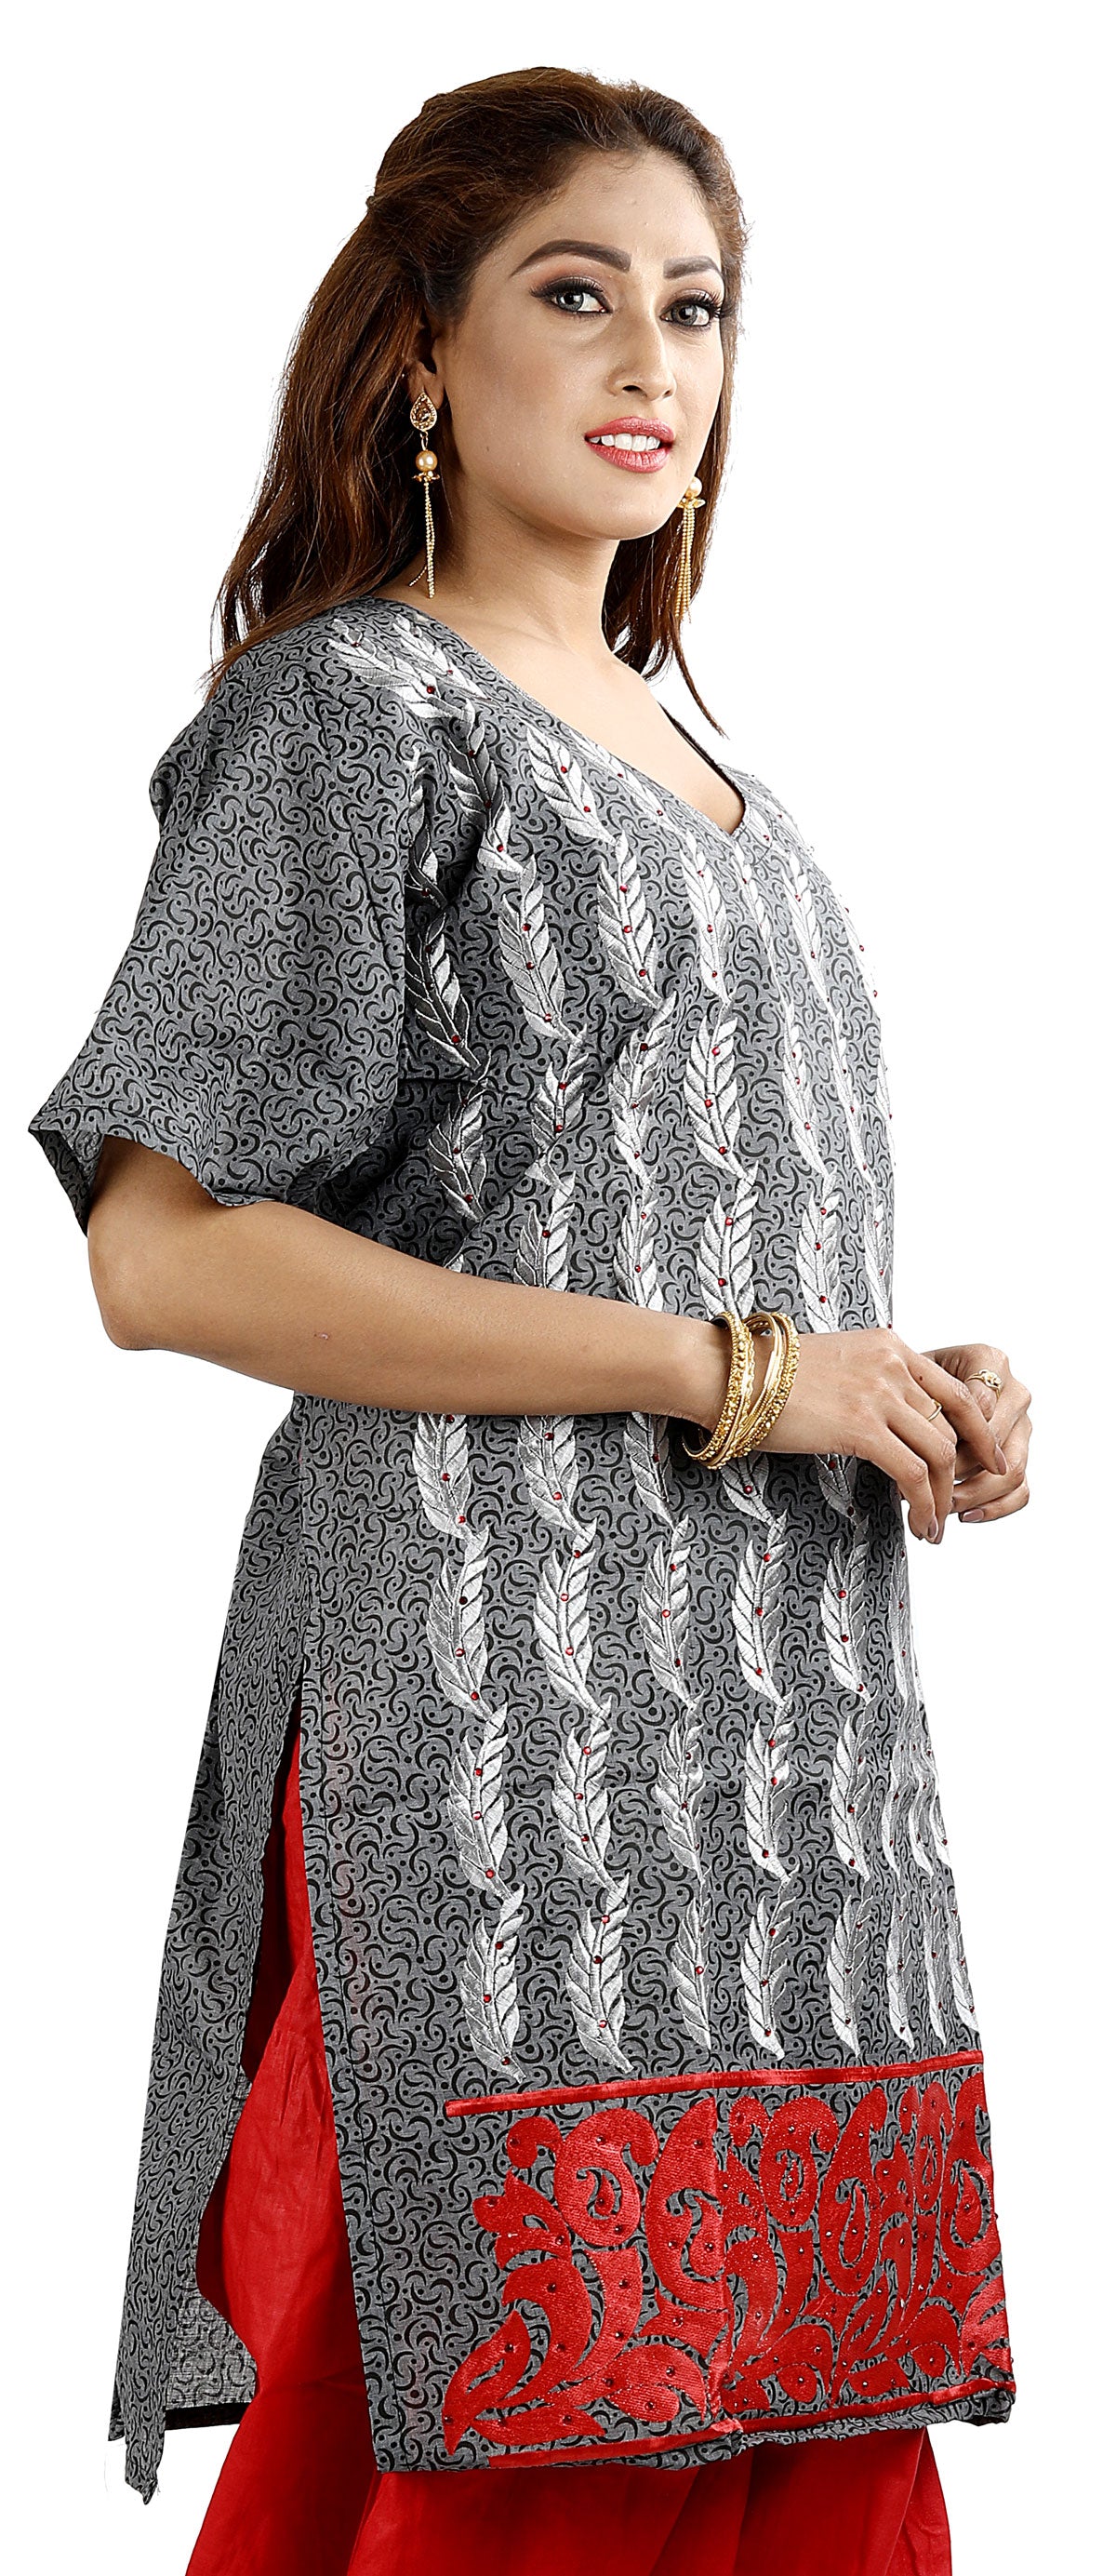 Gray Embroidered Cotton Salwar kameez chest size 44